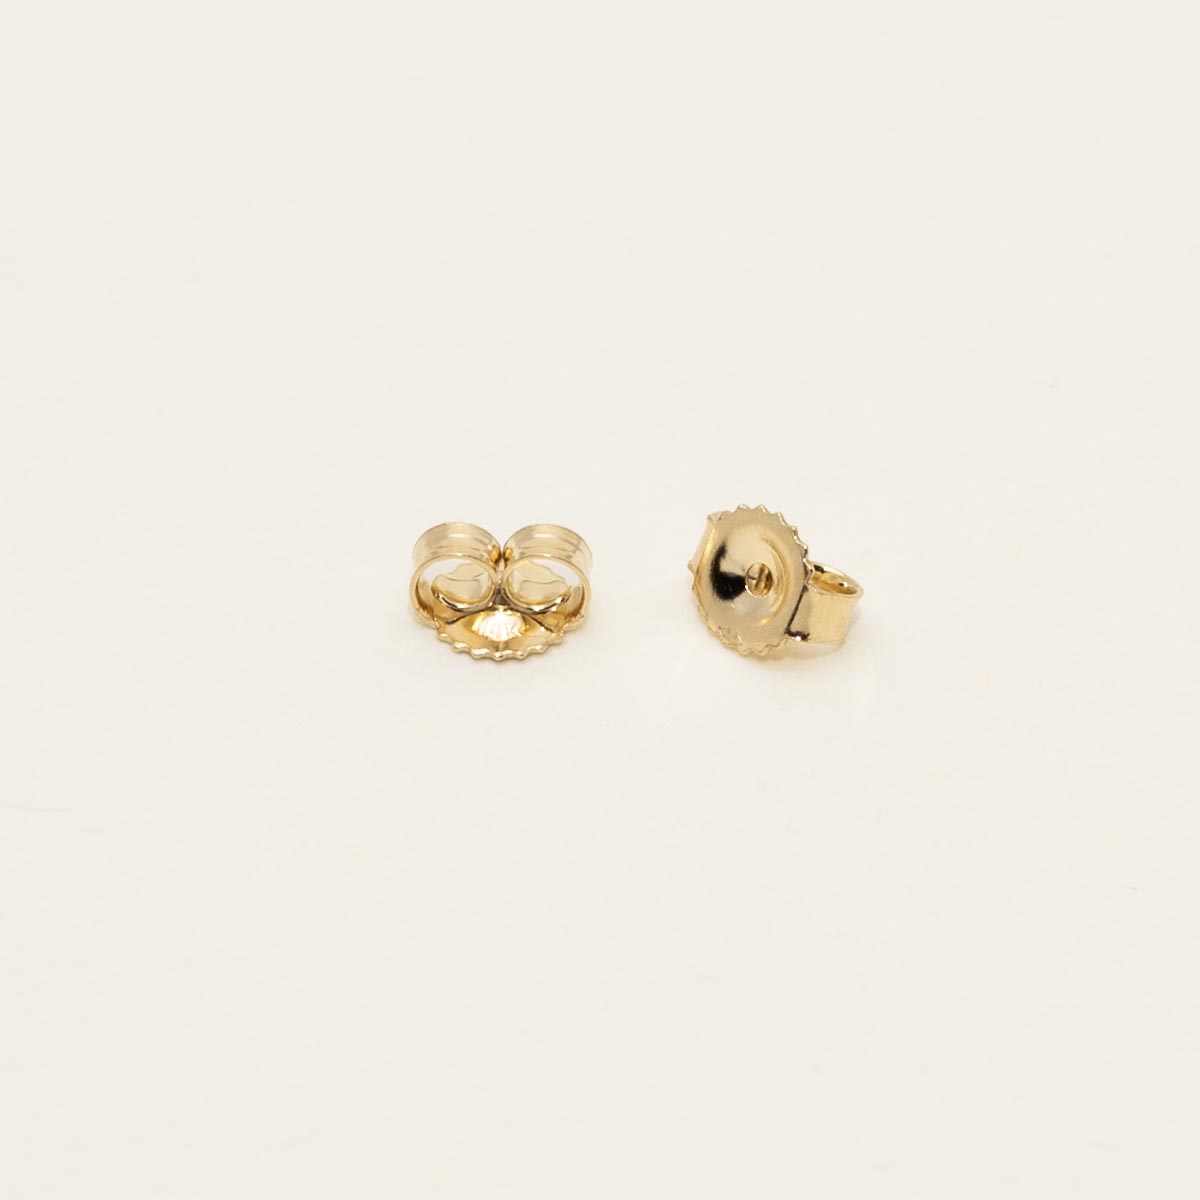 Mastoloni Cultured Akoya Pearl Stud Earrings in 14kt Yellow Gold (6-6.5mm pearls)